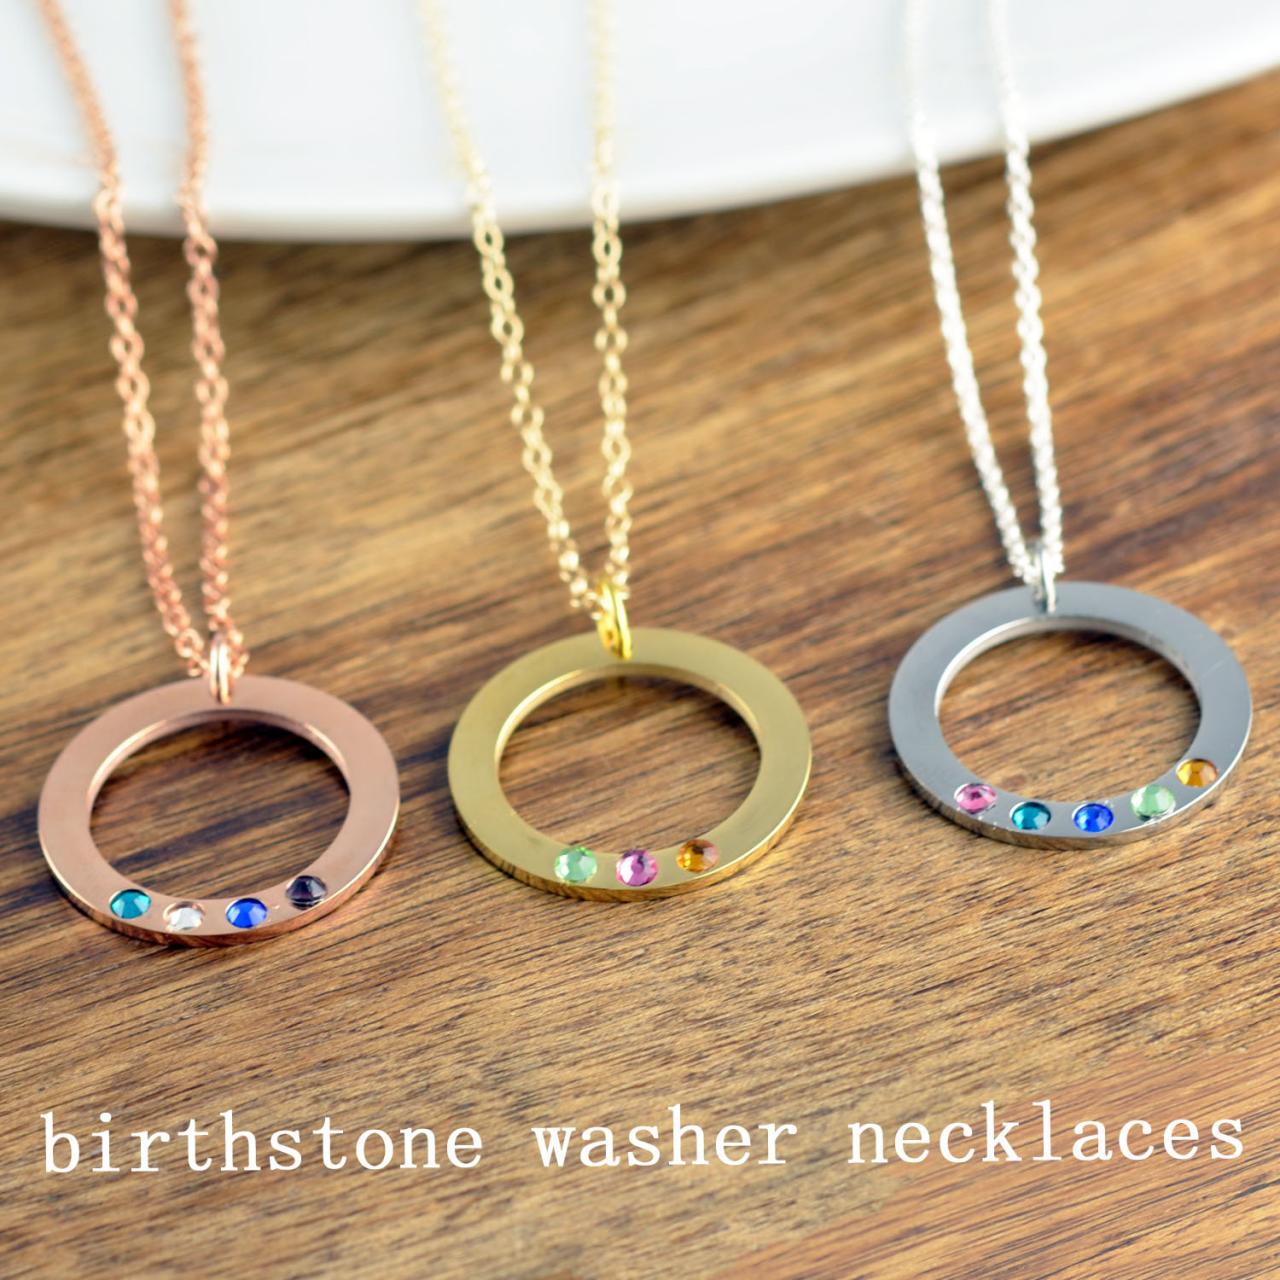 Washer Necklace With Birthstone, Birthstone Necklace For Mom, Grandmother Gift, Birthstone Necklace, Birthstone Jewelry,grandmother Necklace